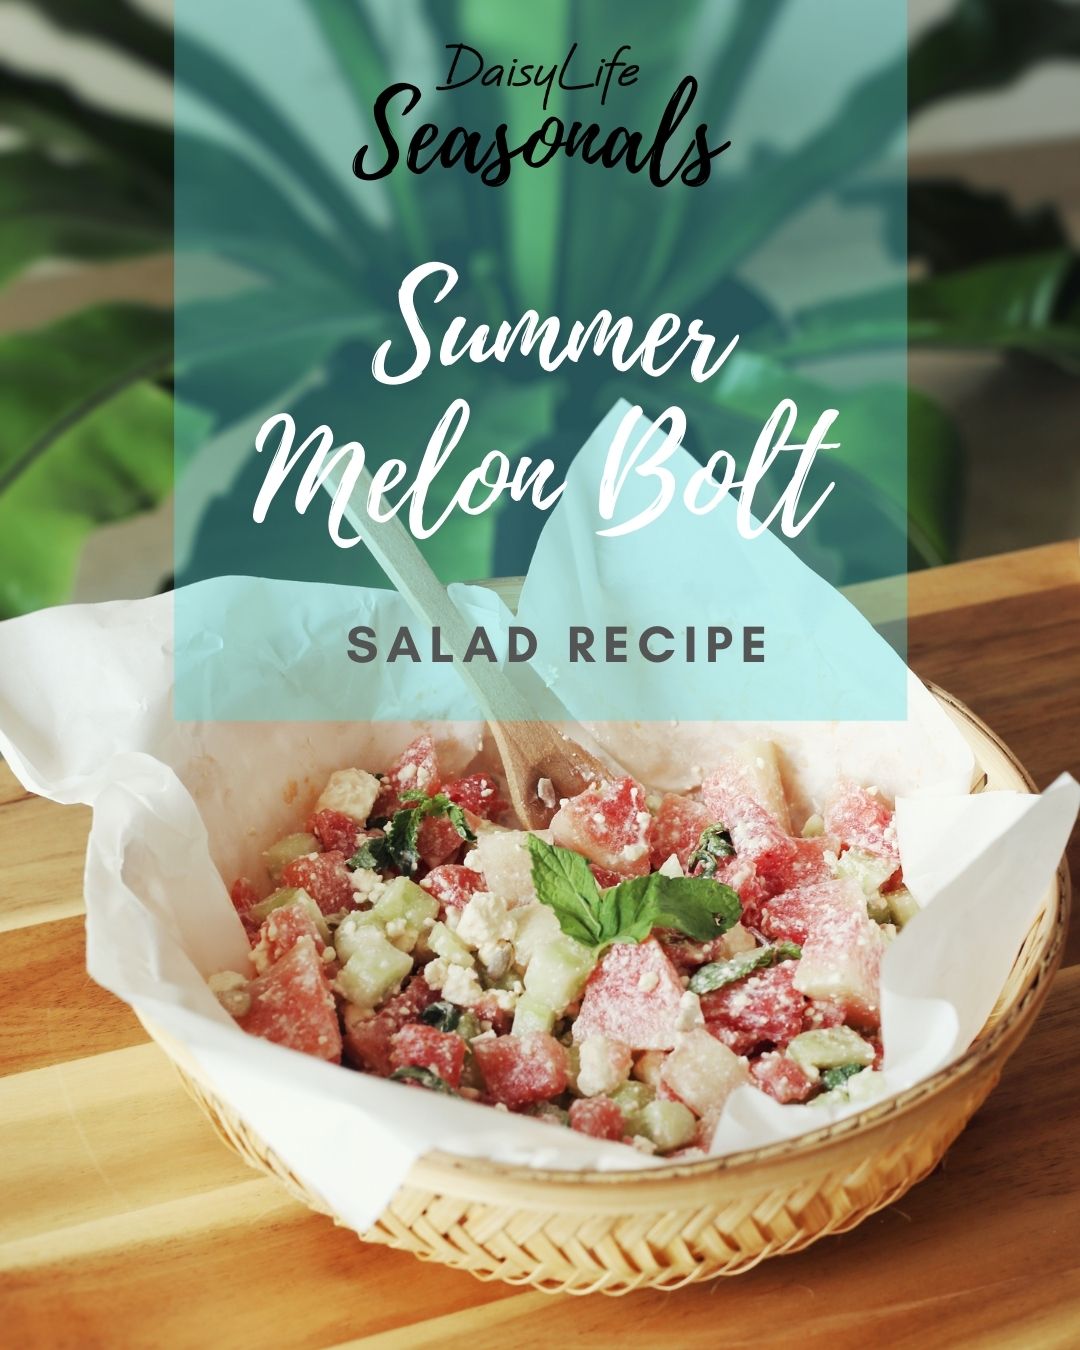 SUMMER MELON BOLT: A Summer Salad Recipe with Watermelon, Cucumber and Feta Cheese